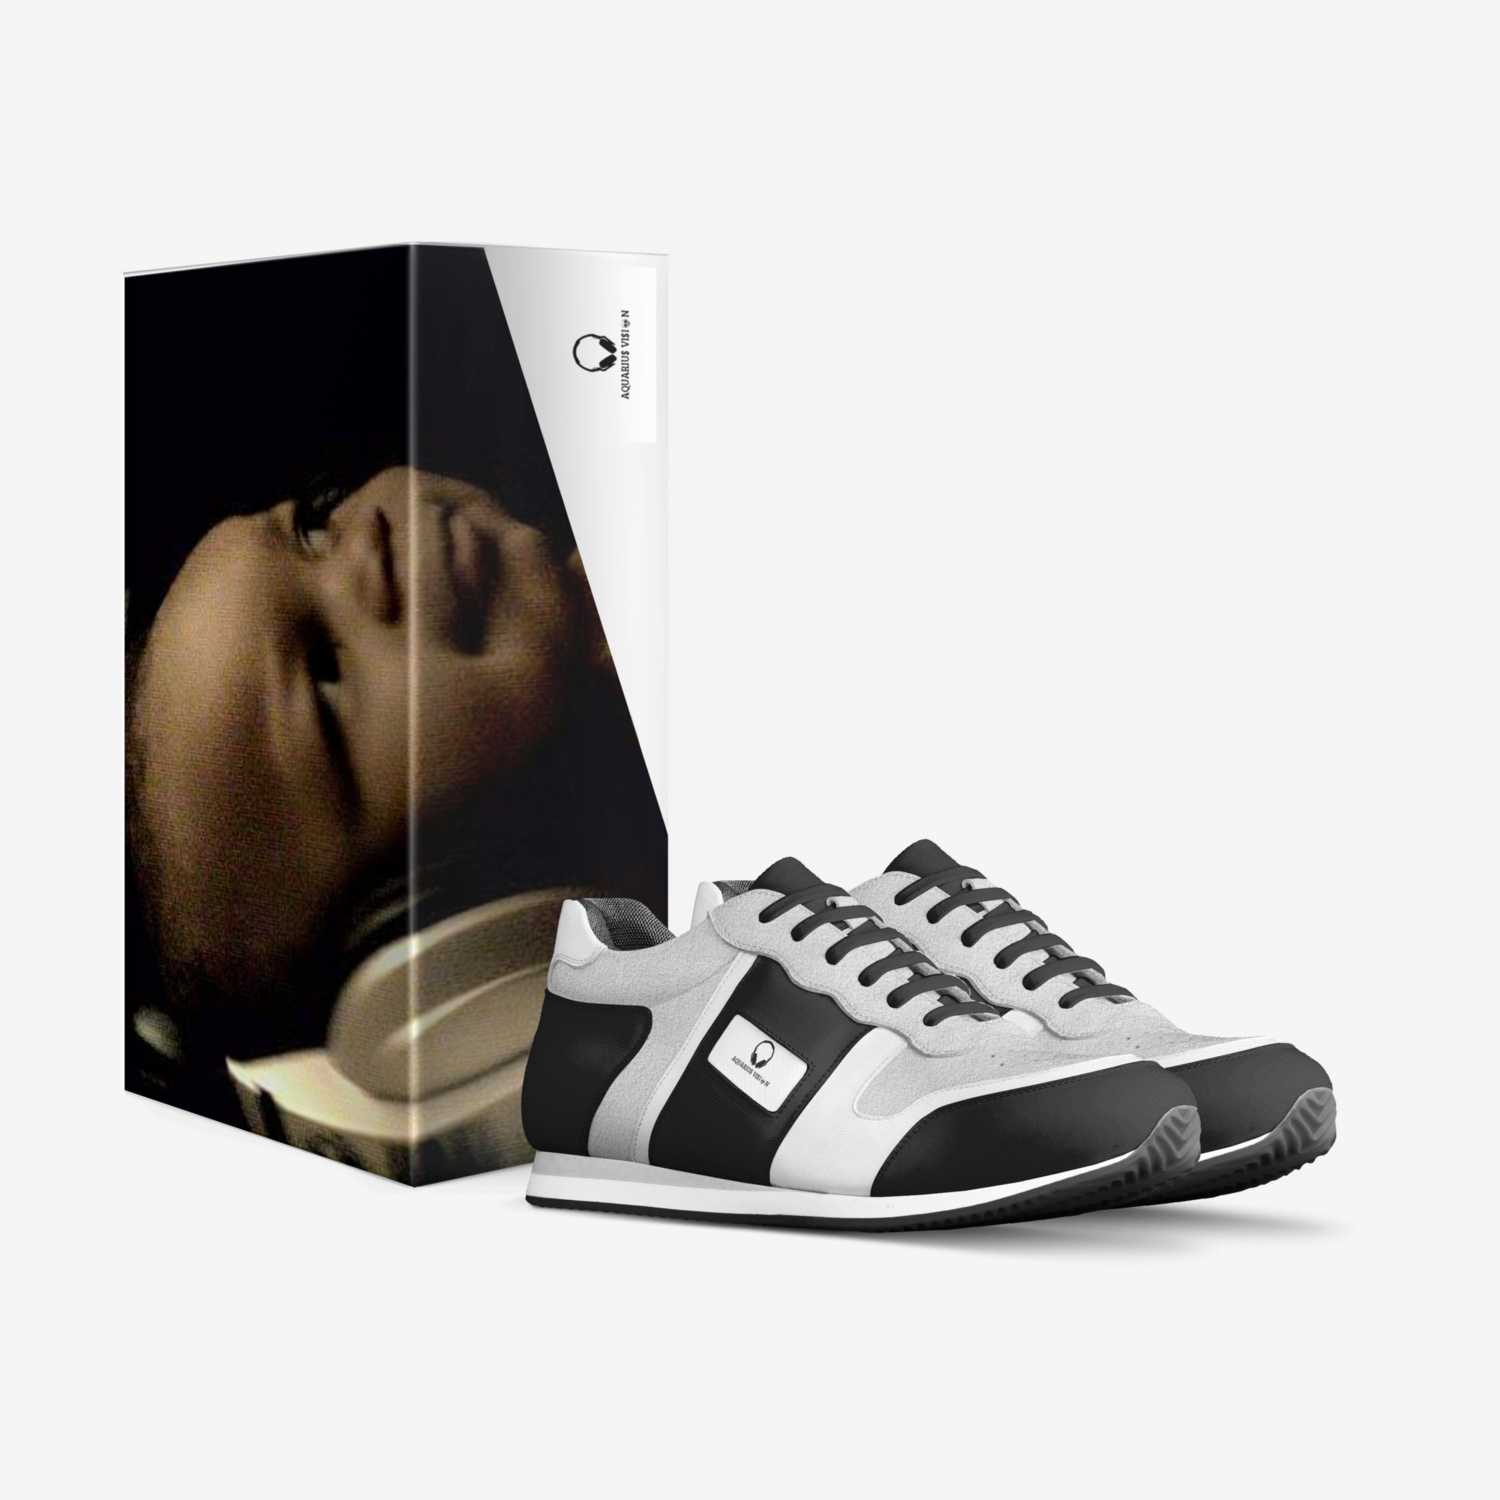 Komora Sk1 custom made in Italy shoes by AQUARIU$ VI$I💀N Brand  | Box view